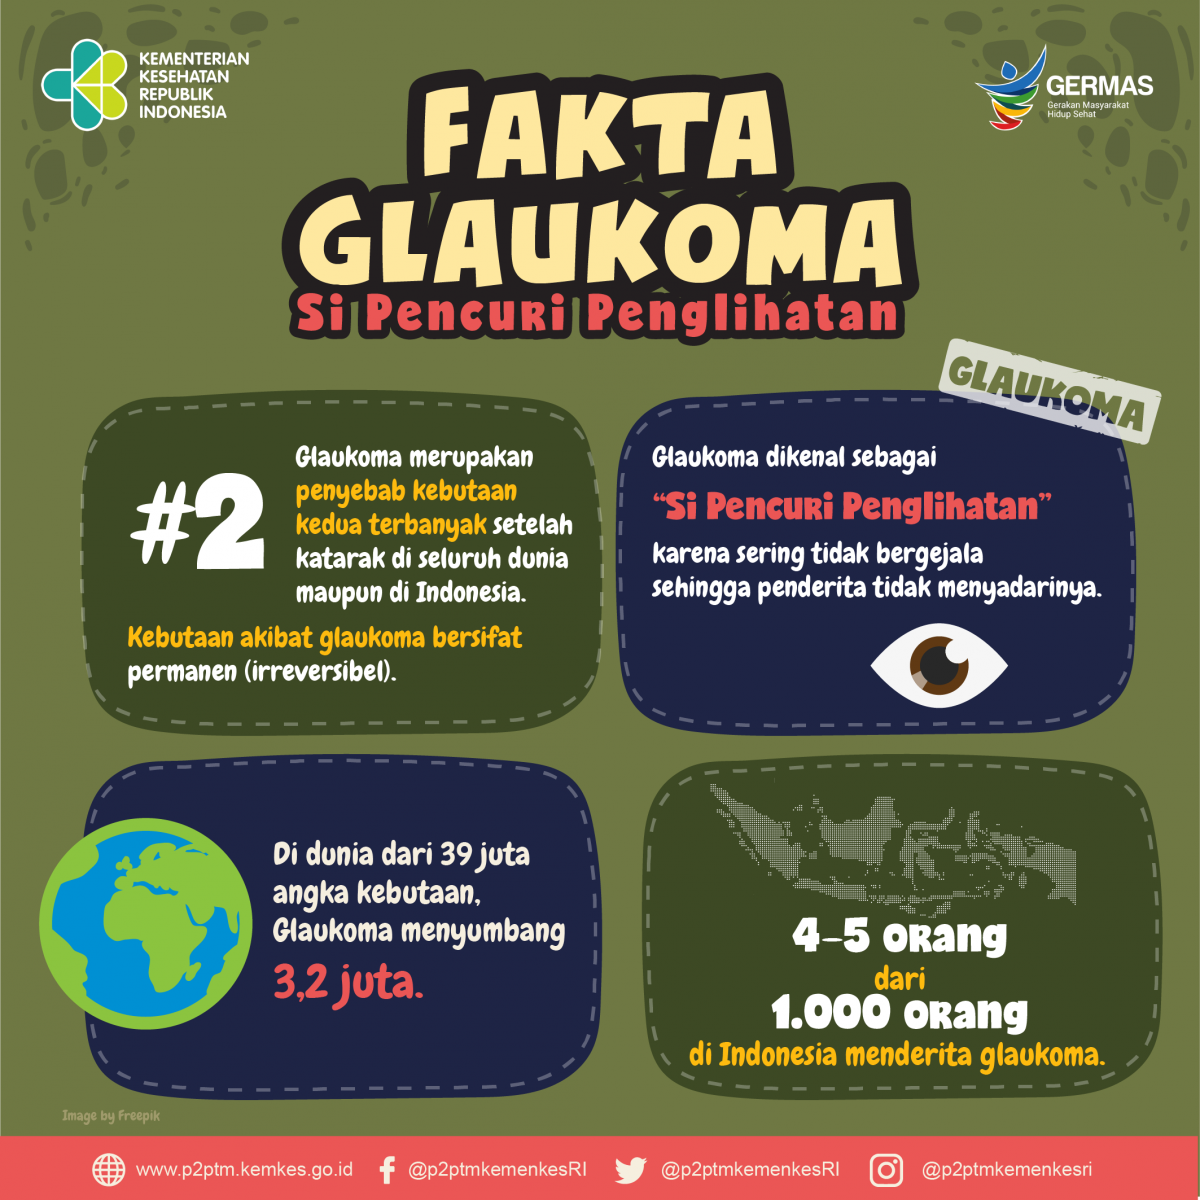 Apa saja Fakta Glaukoma?